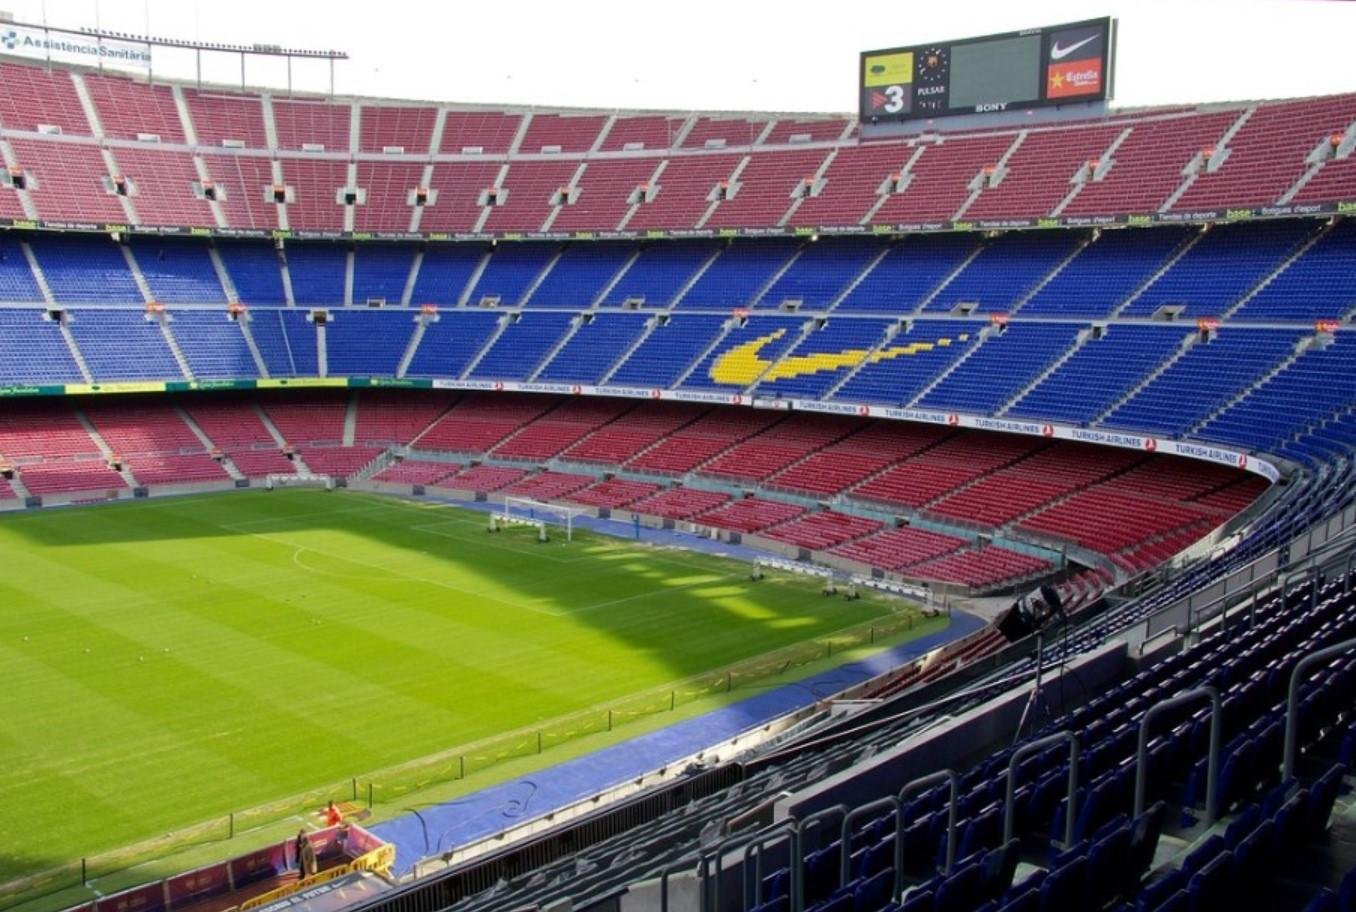 Включи стадиону. Барселона Камп ноу. Камп ноу стадион. Стадион ФК Барселона. Испания стадион Камп ноу.